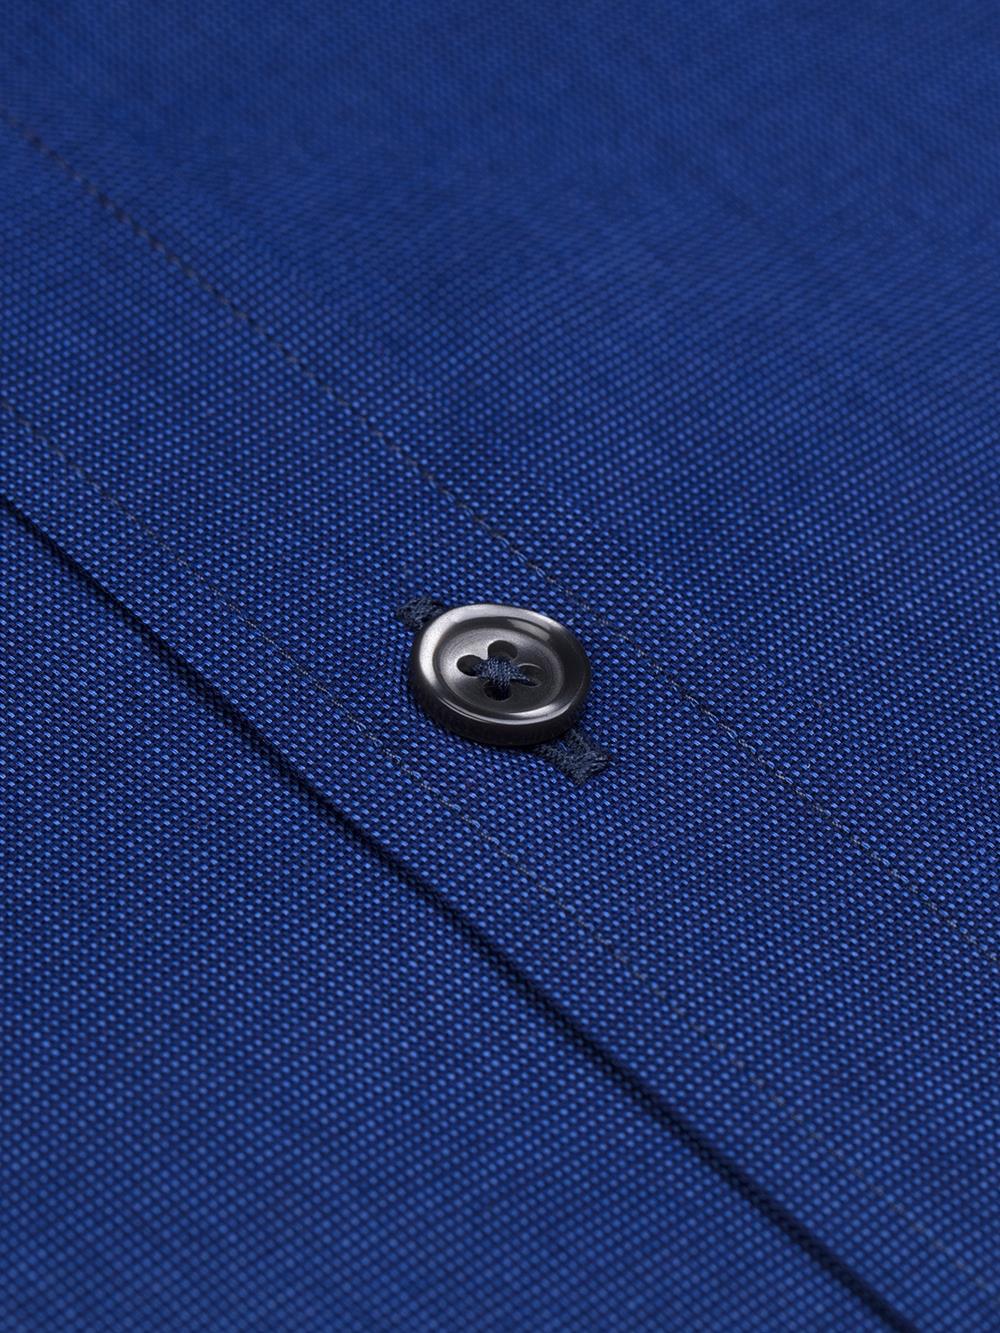 Bob overhemd met korte mouwen in blauw micro-oxford - Button-down kraag